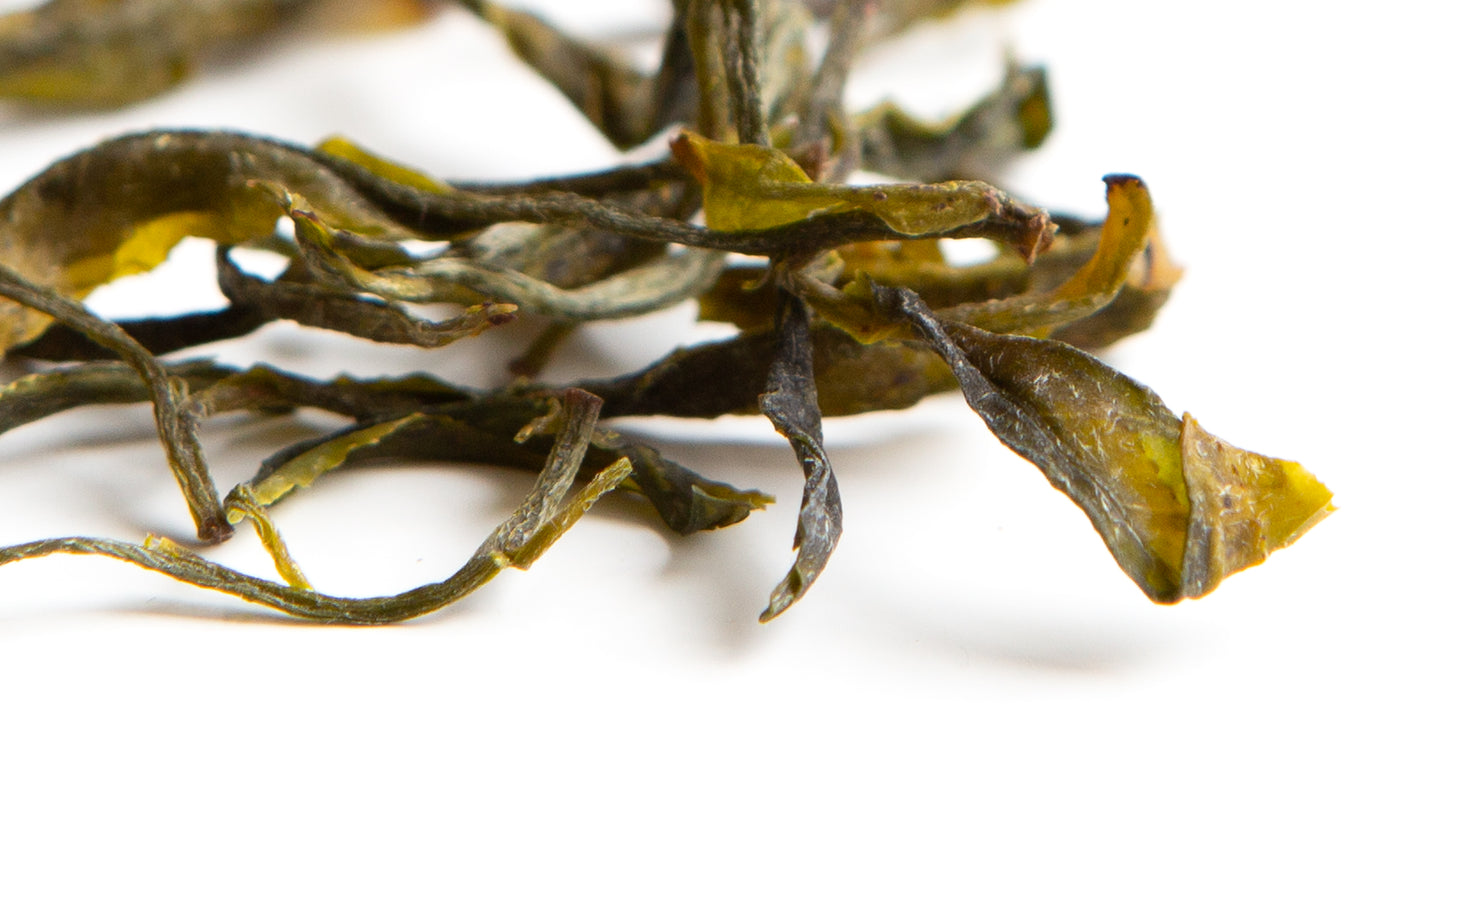 Landerneau steamed green tea - Emile Auté